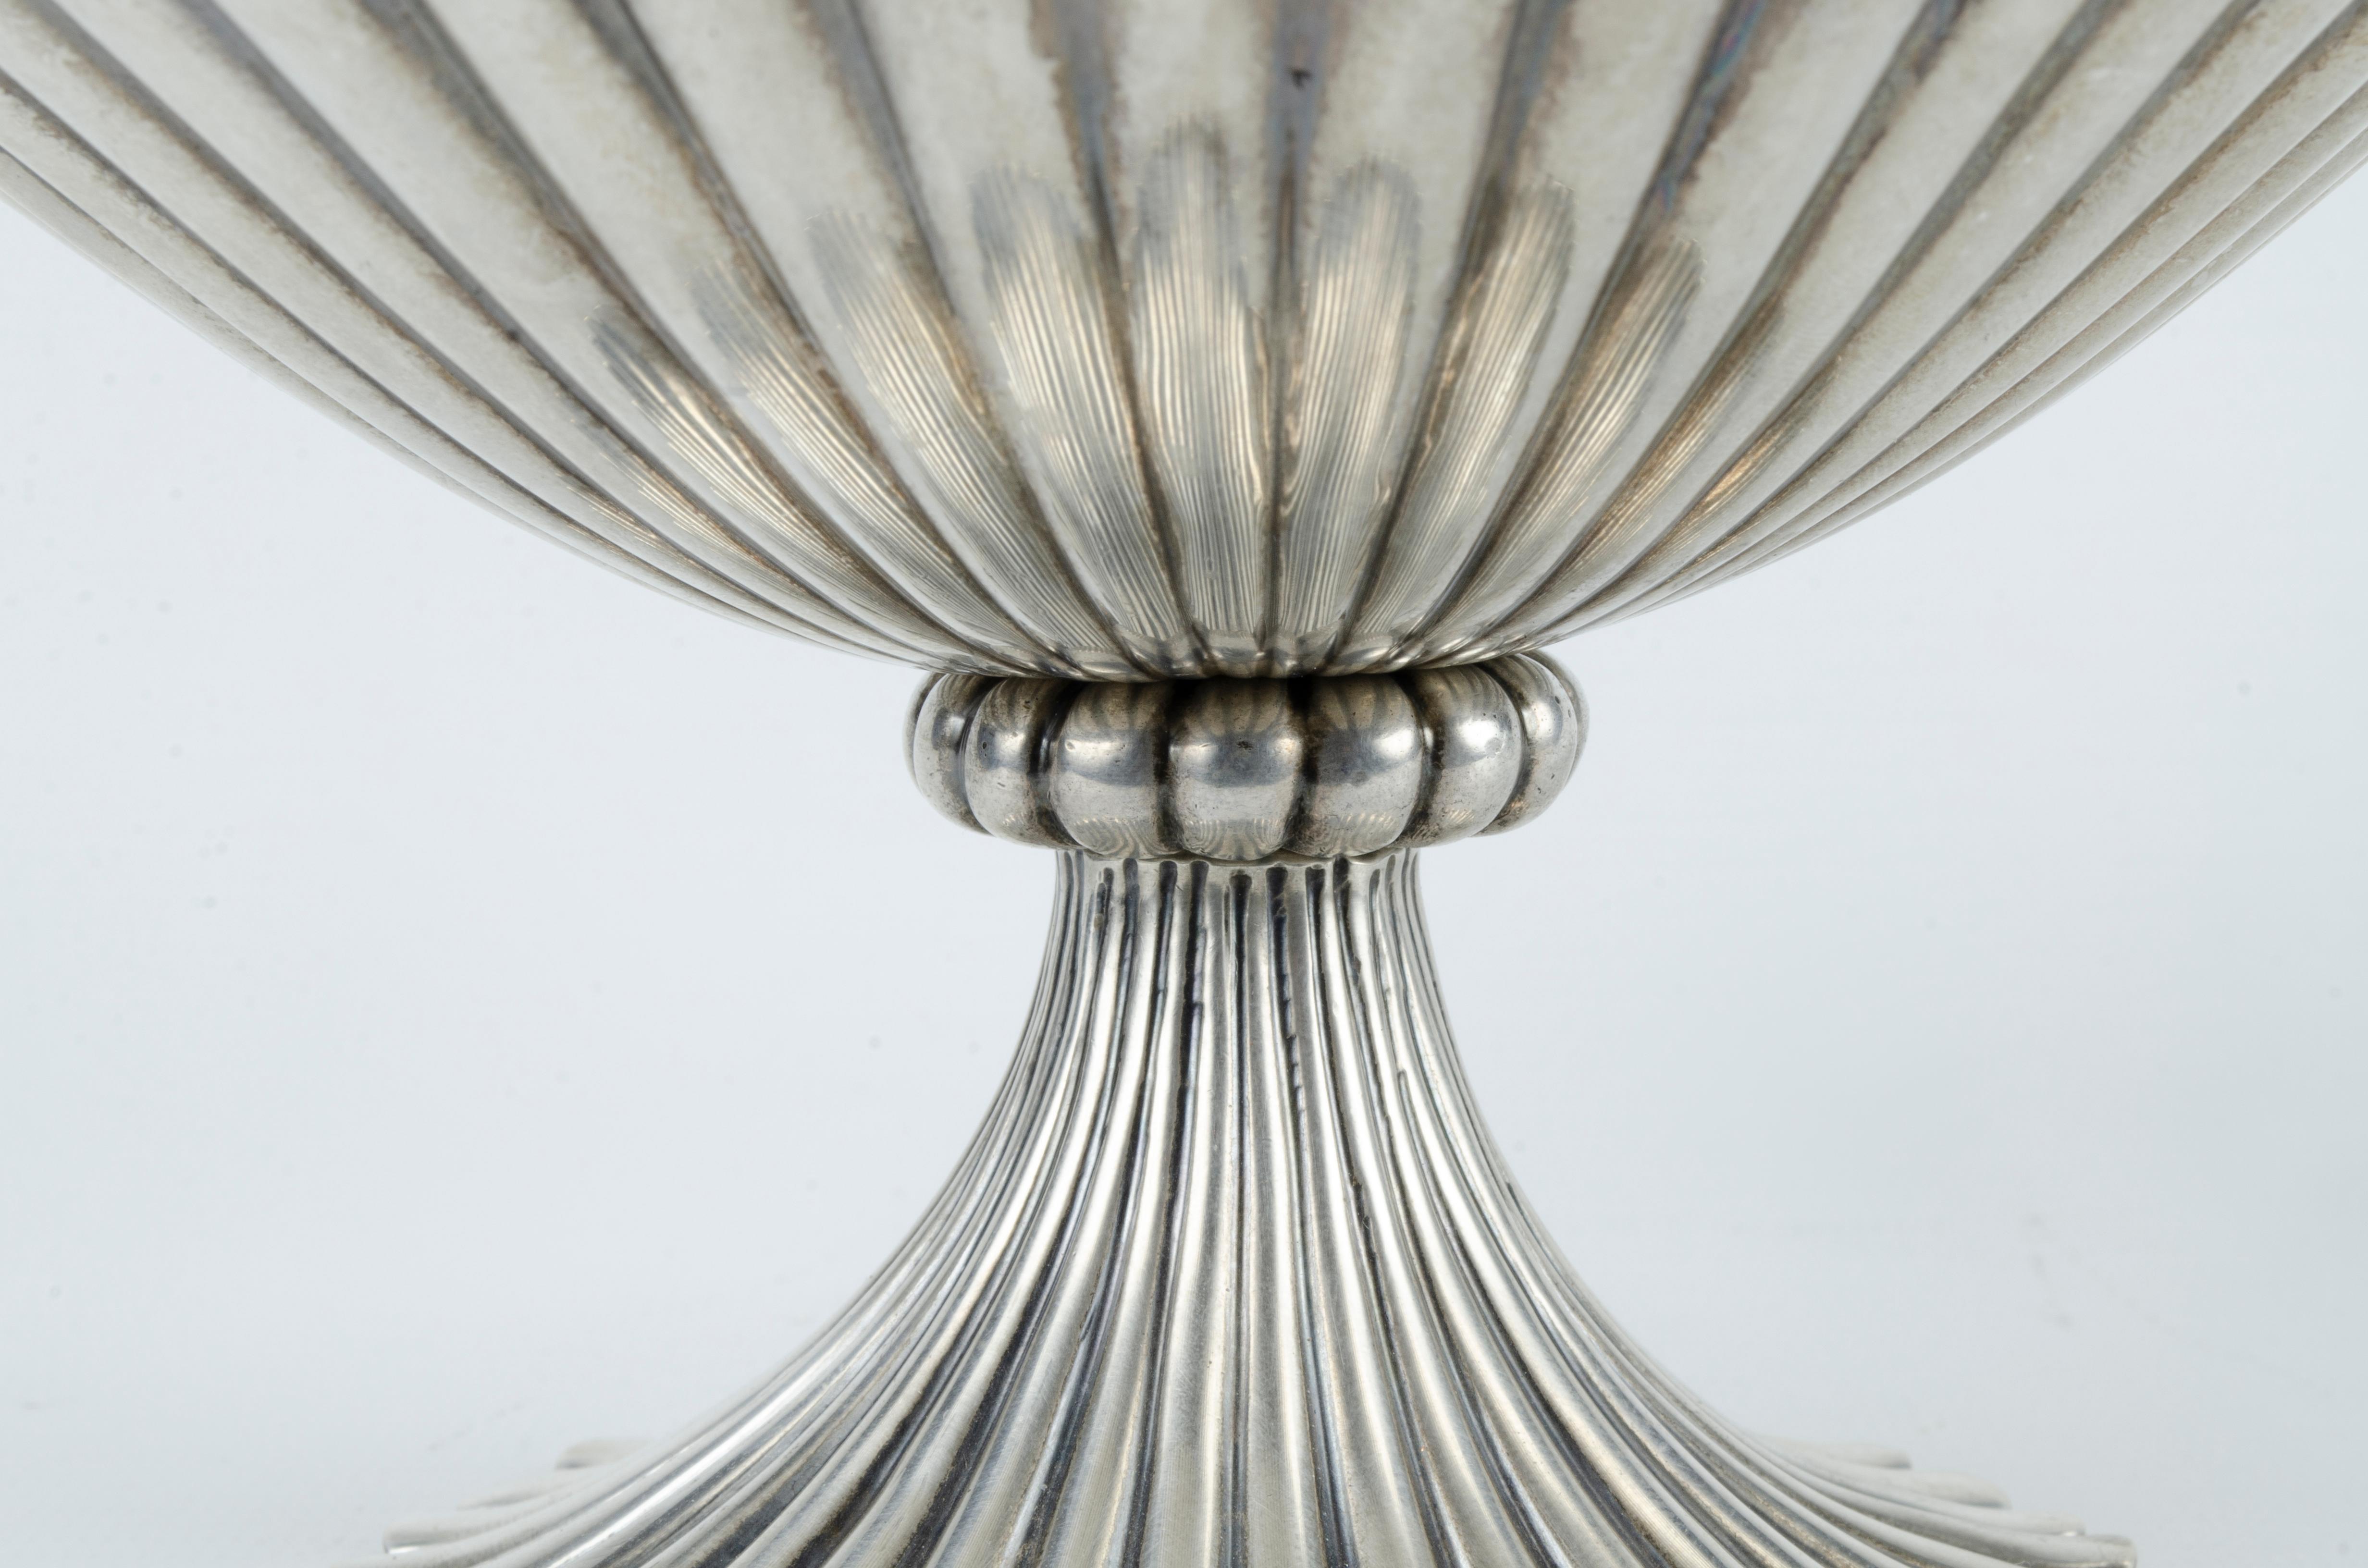 A silver bowls hand carved, made of silver and hallmarked on the lower bottom.

In style of Wiener Werkstätte, Vienna Wokshop, designed by Josef Hoffmann

Austria, circa 1920.